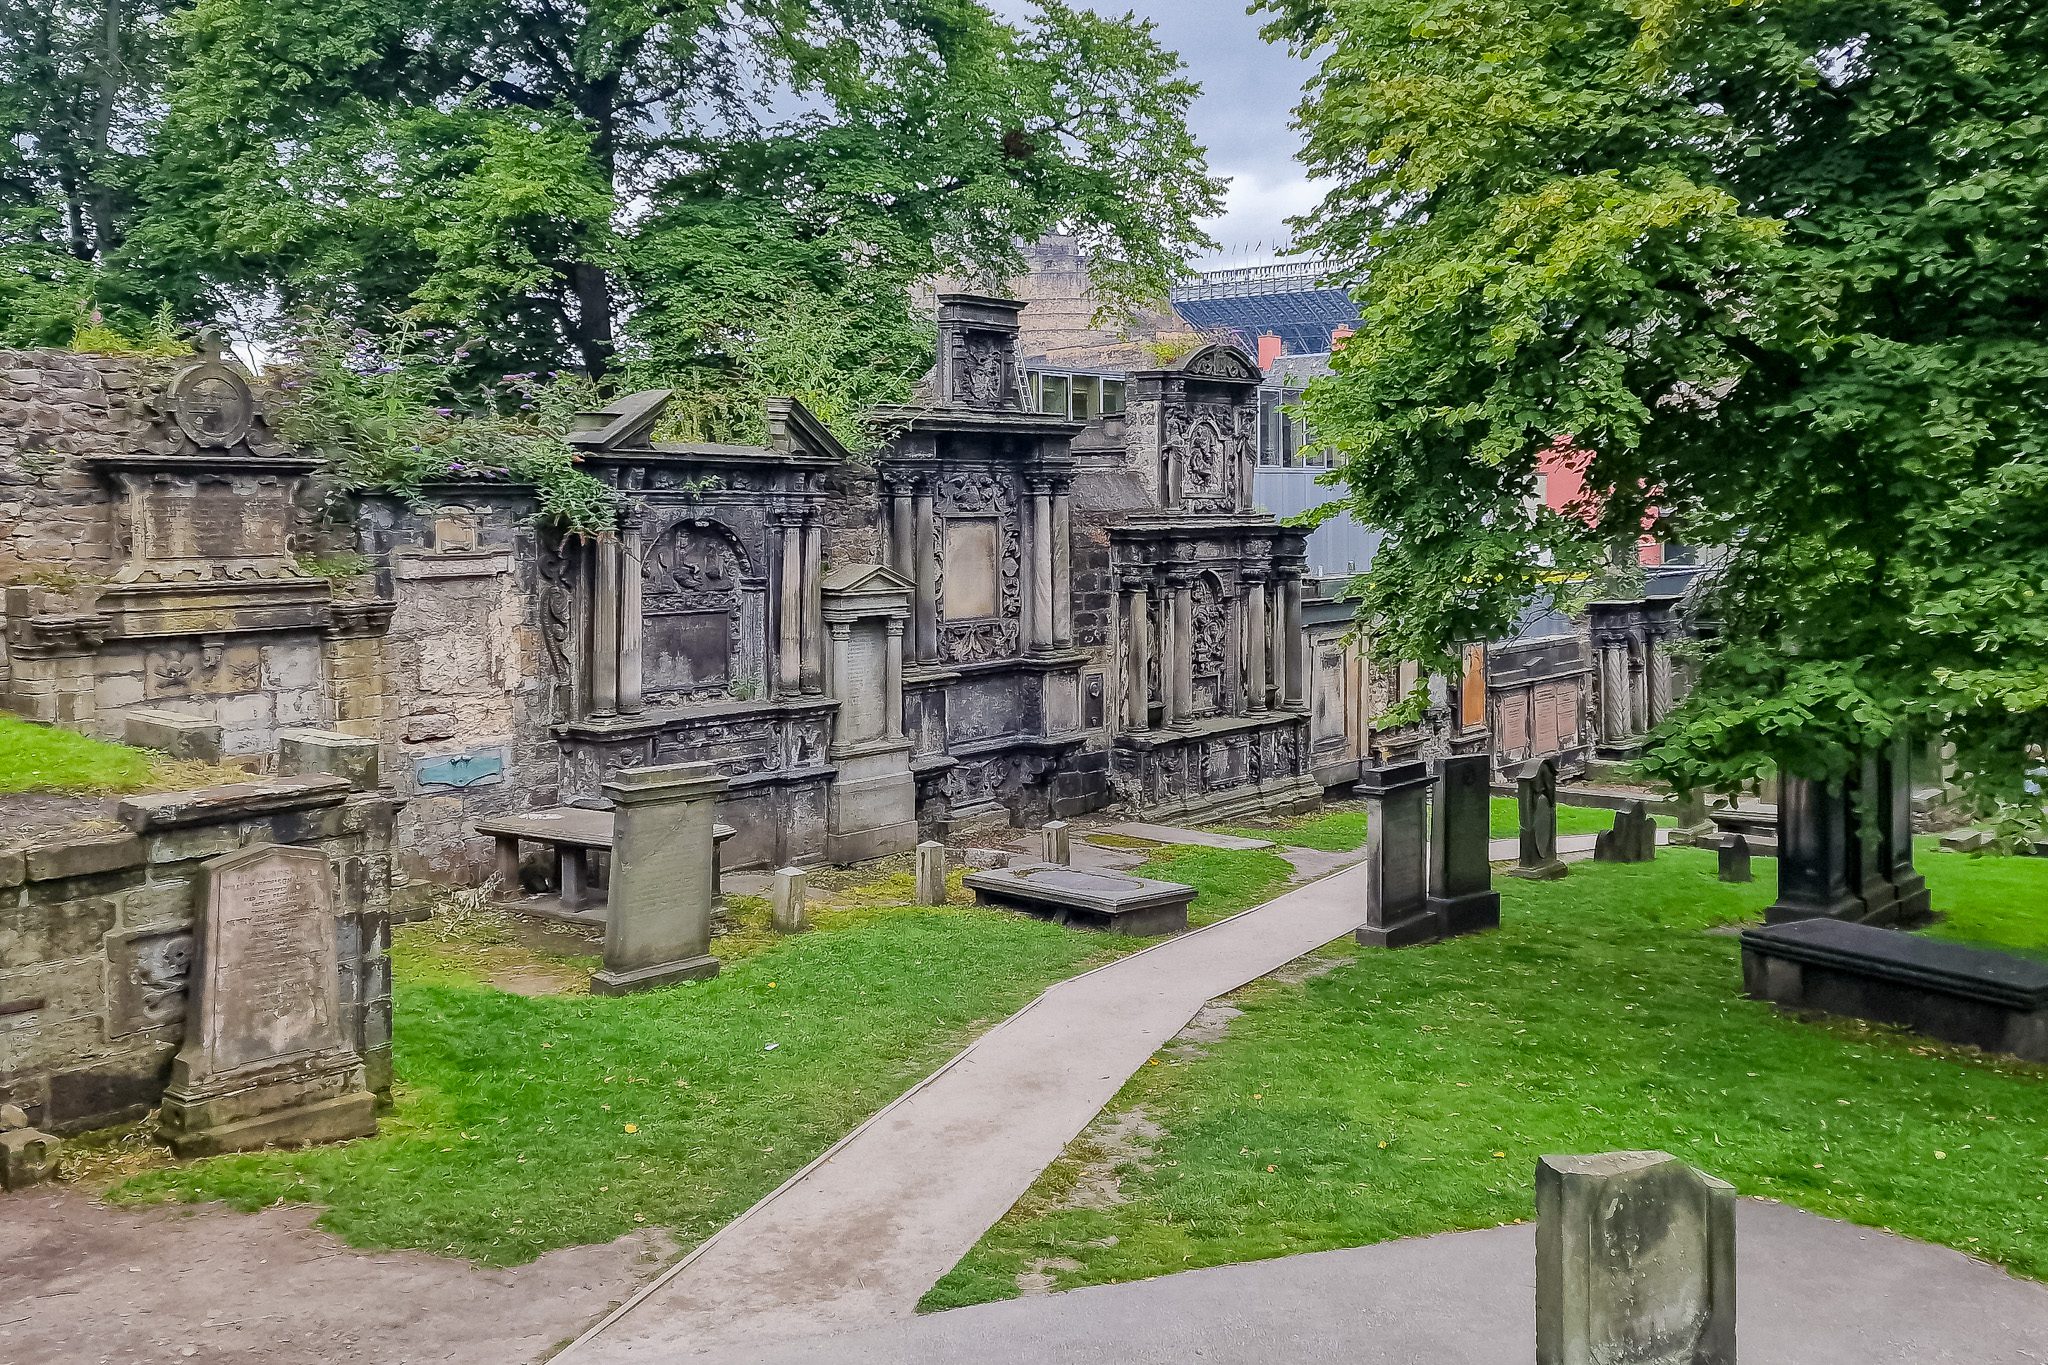 The Greyfriars Kirkyard, a graveyard in Edinburgh, Scotland.